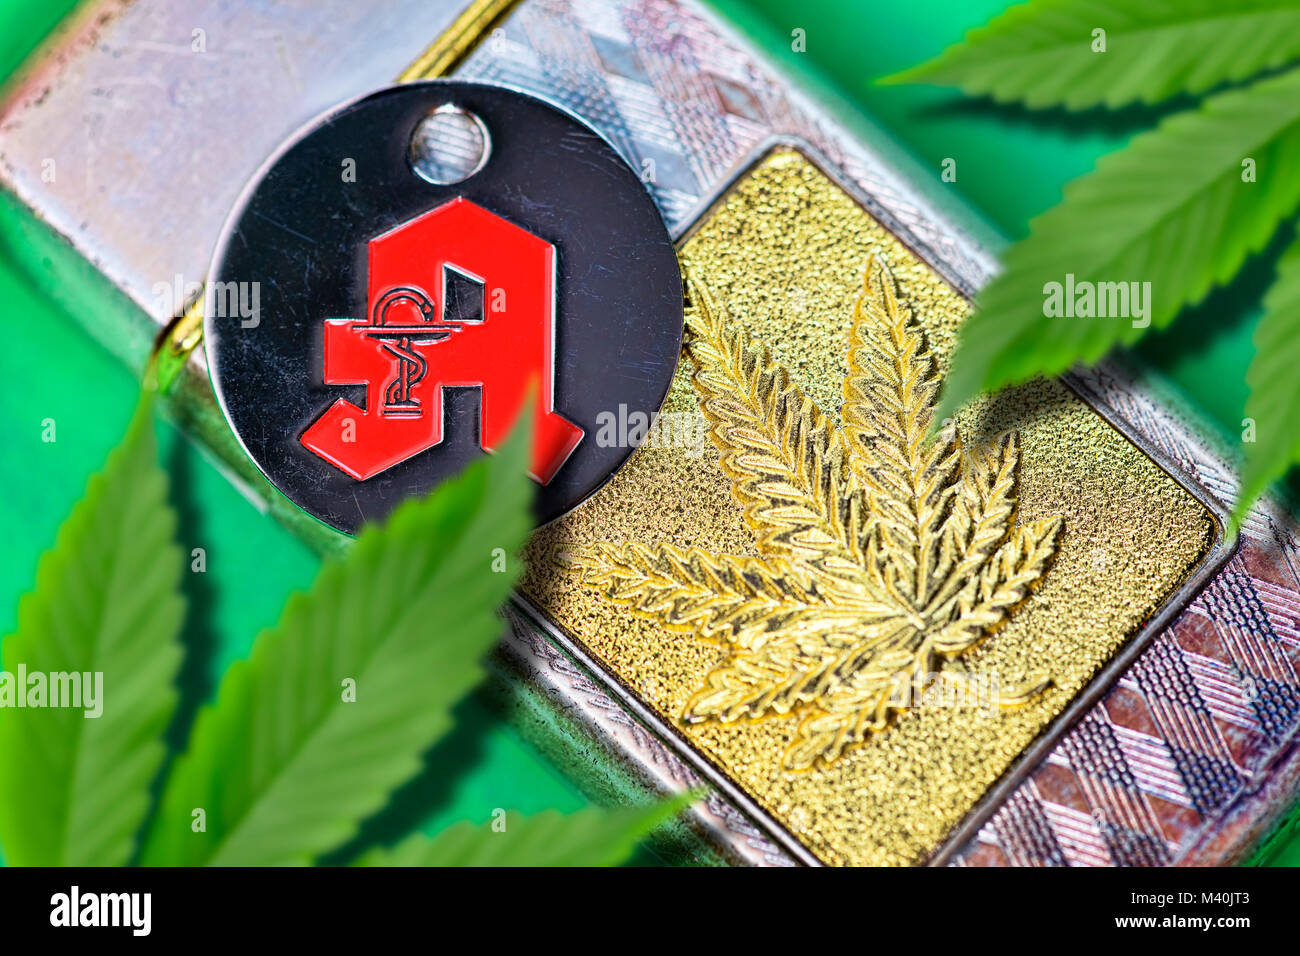 Cannabisblatt hi-res stock photography and images - Alamy